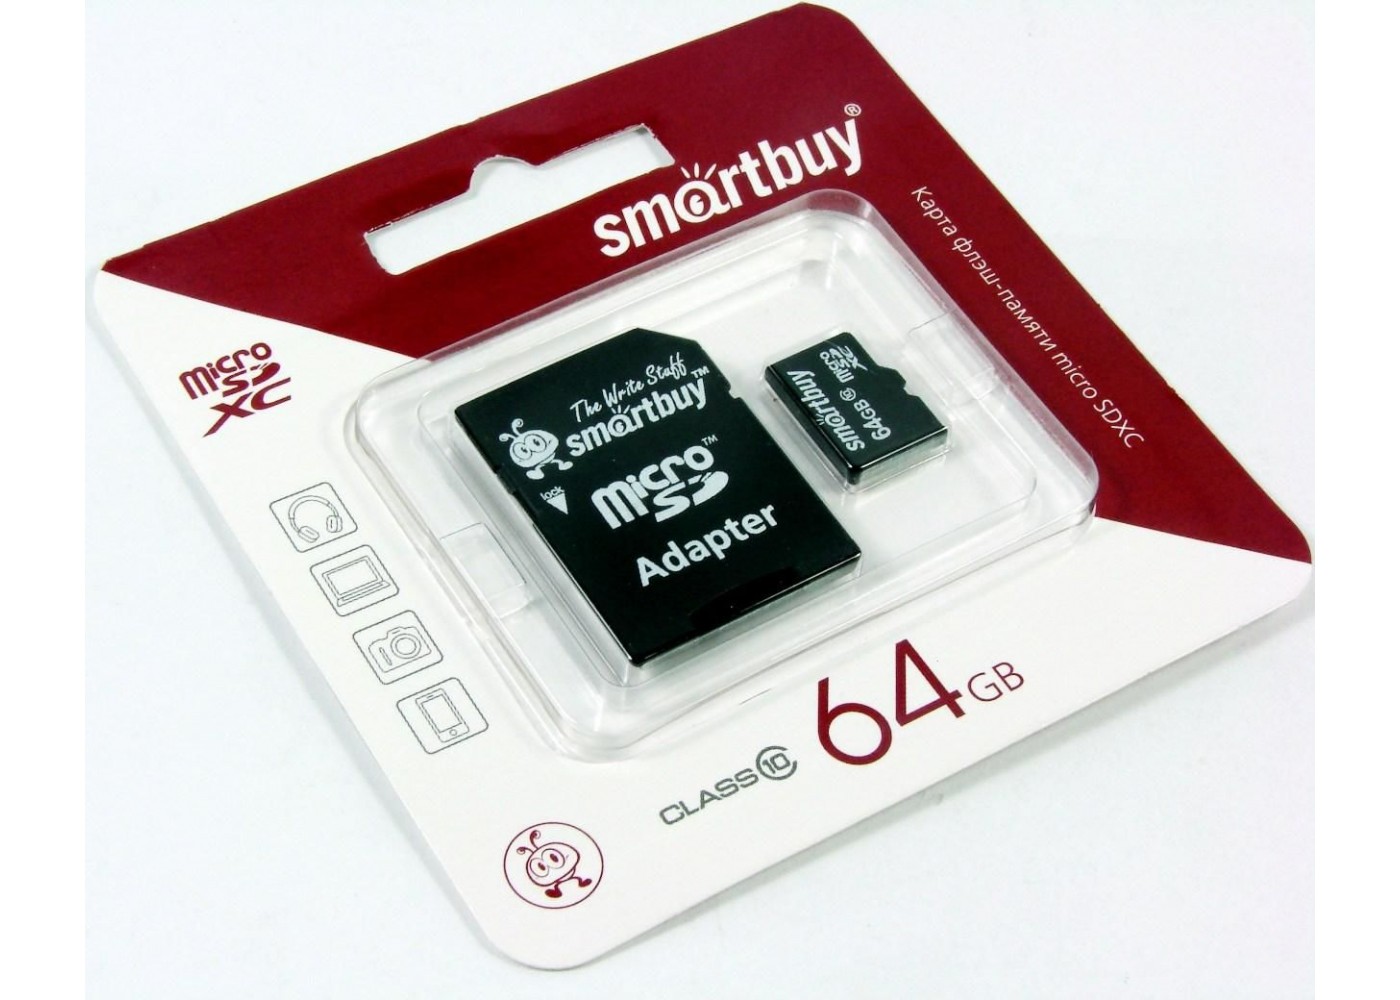 Встроенная память 64 гб. Карта памяти SMARTBUY MICROSDXC class 10 64gb + SD Adapter. Smart buy 128gb Micro SDXC class 10 UHS-I + SD адаптер. Карта памяти Micro SDXC 64gb SMARTBUY (class 10, адаптер). MICROSD 64gb SMARTBUY MICROSDXC class 10 UHS-I u1.